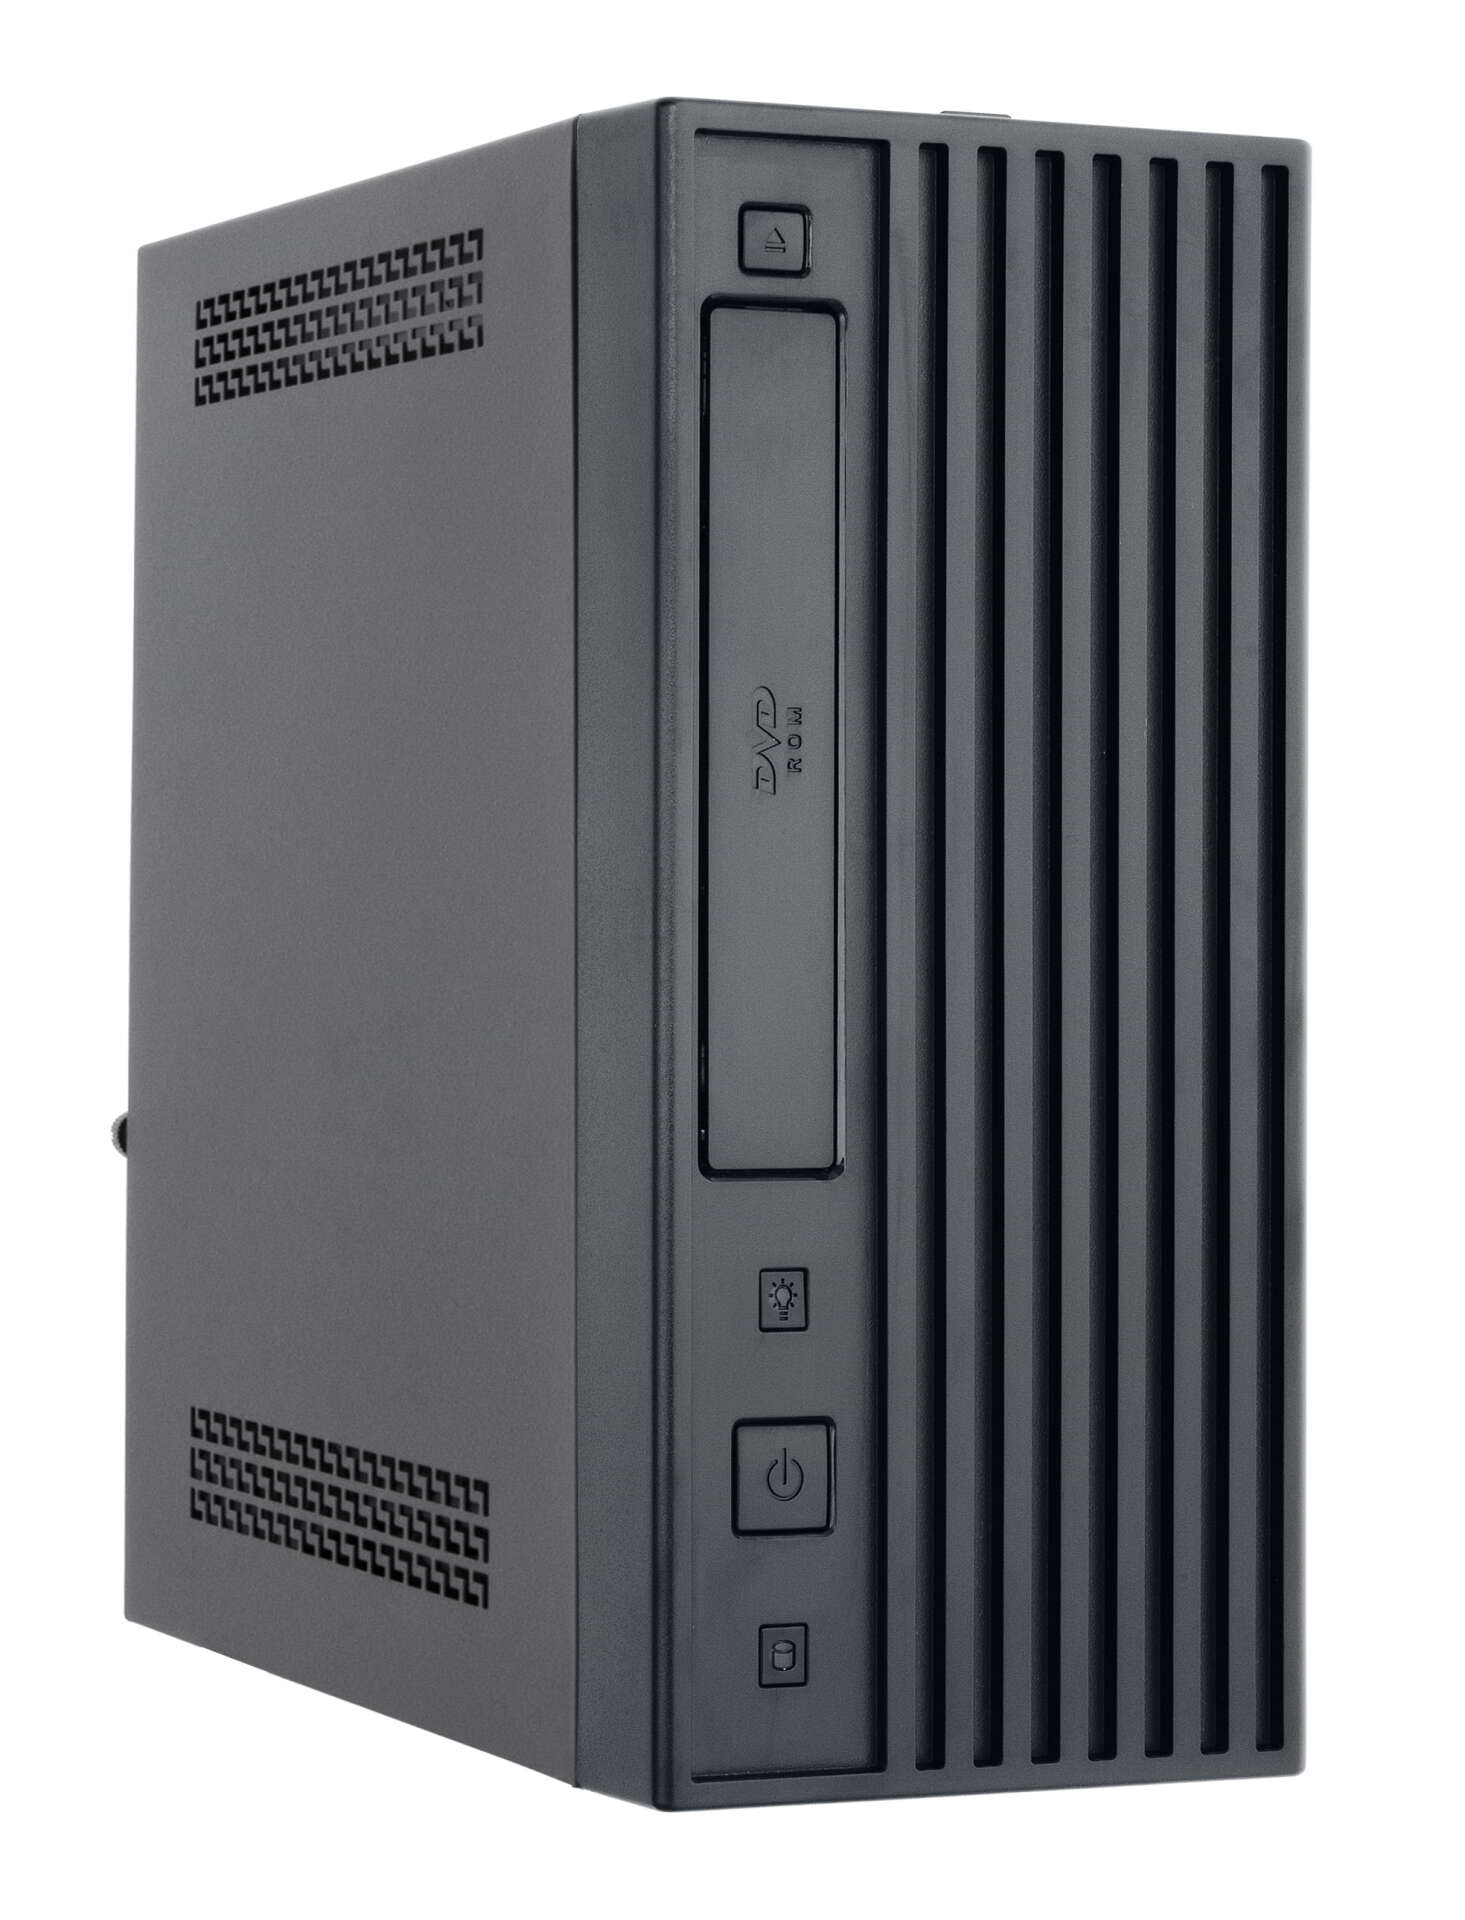 Chieftec bt-02b-u3-350bfx számítógépház - fekete + 350w psu